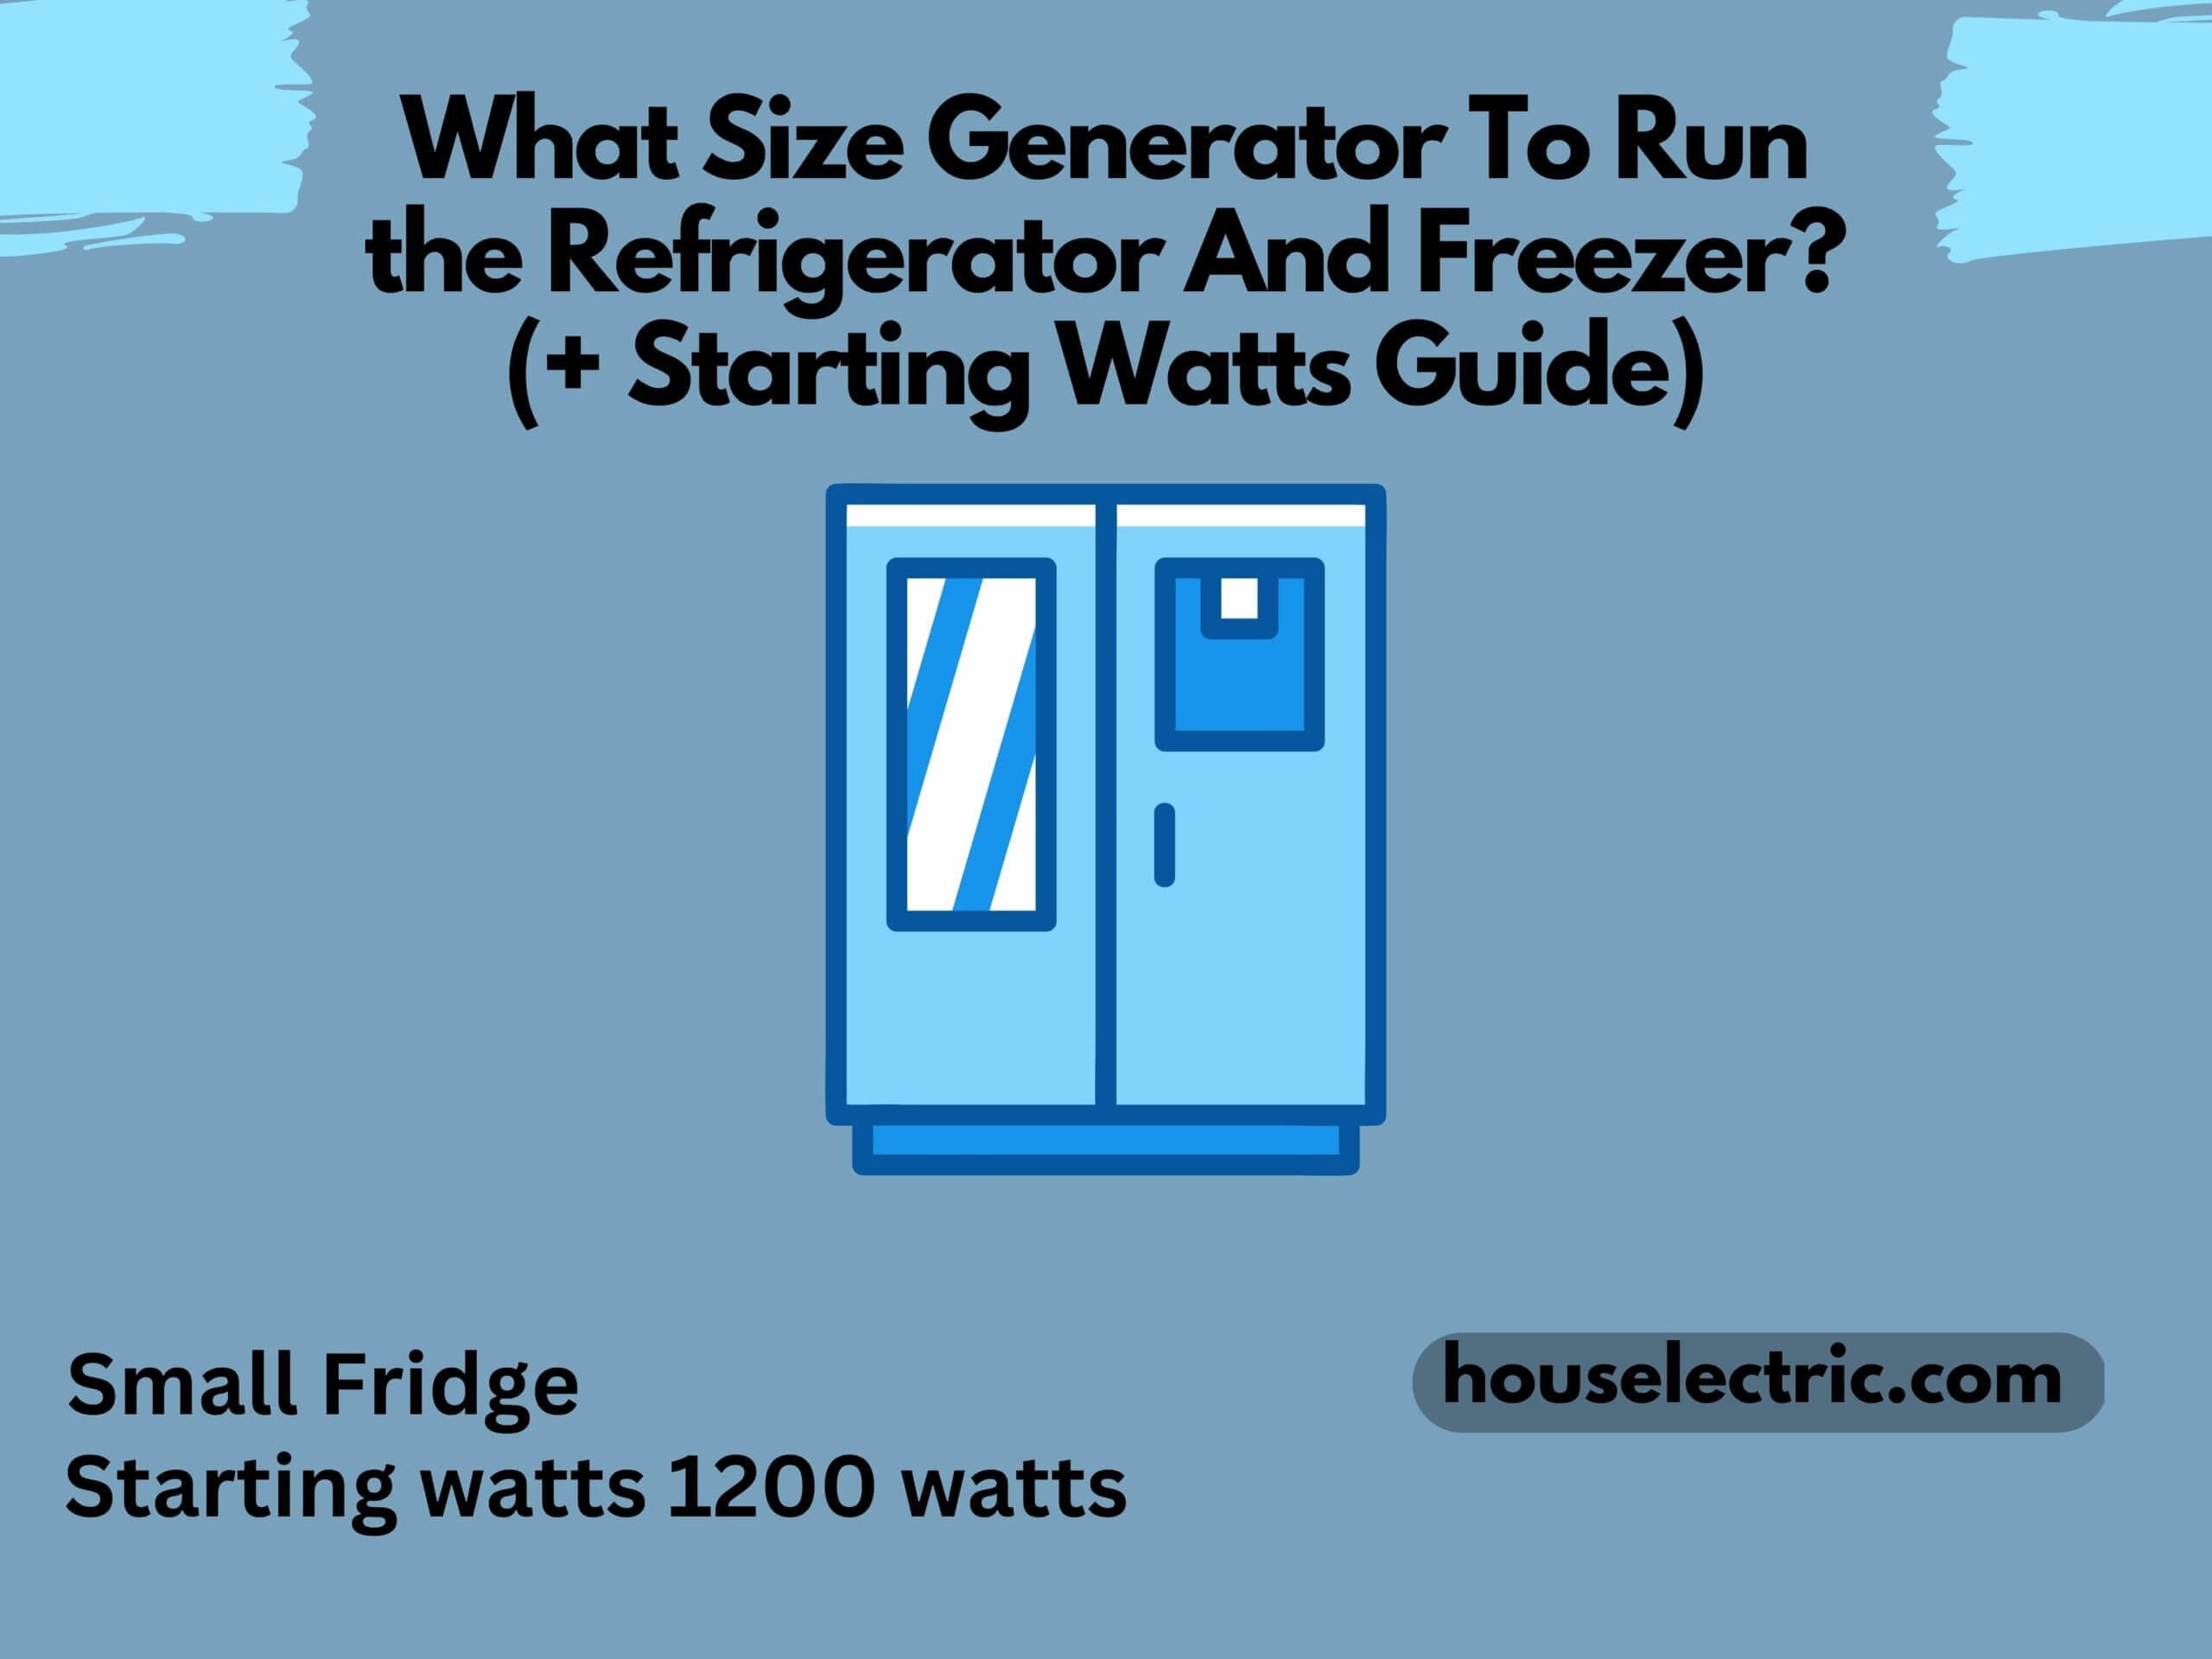 Generator To Run the Refrigerator And Freezer